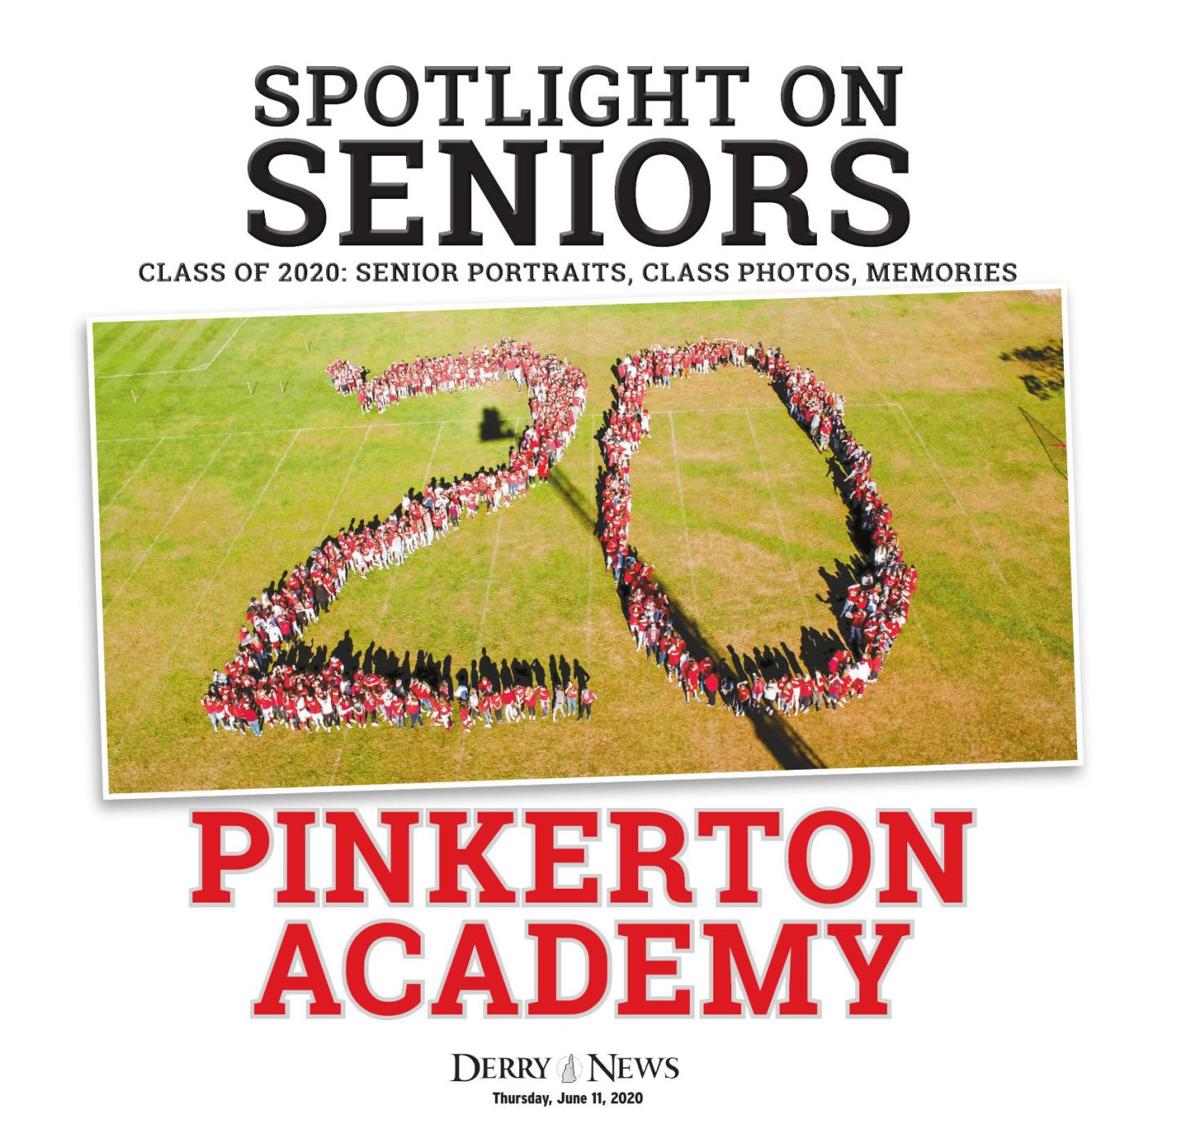 Pinkerton Academy Spotlight on Seniors 20202 Derry News derrynews com